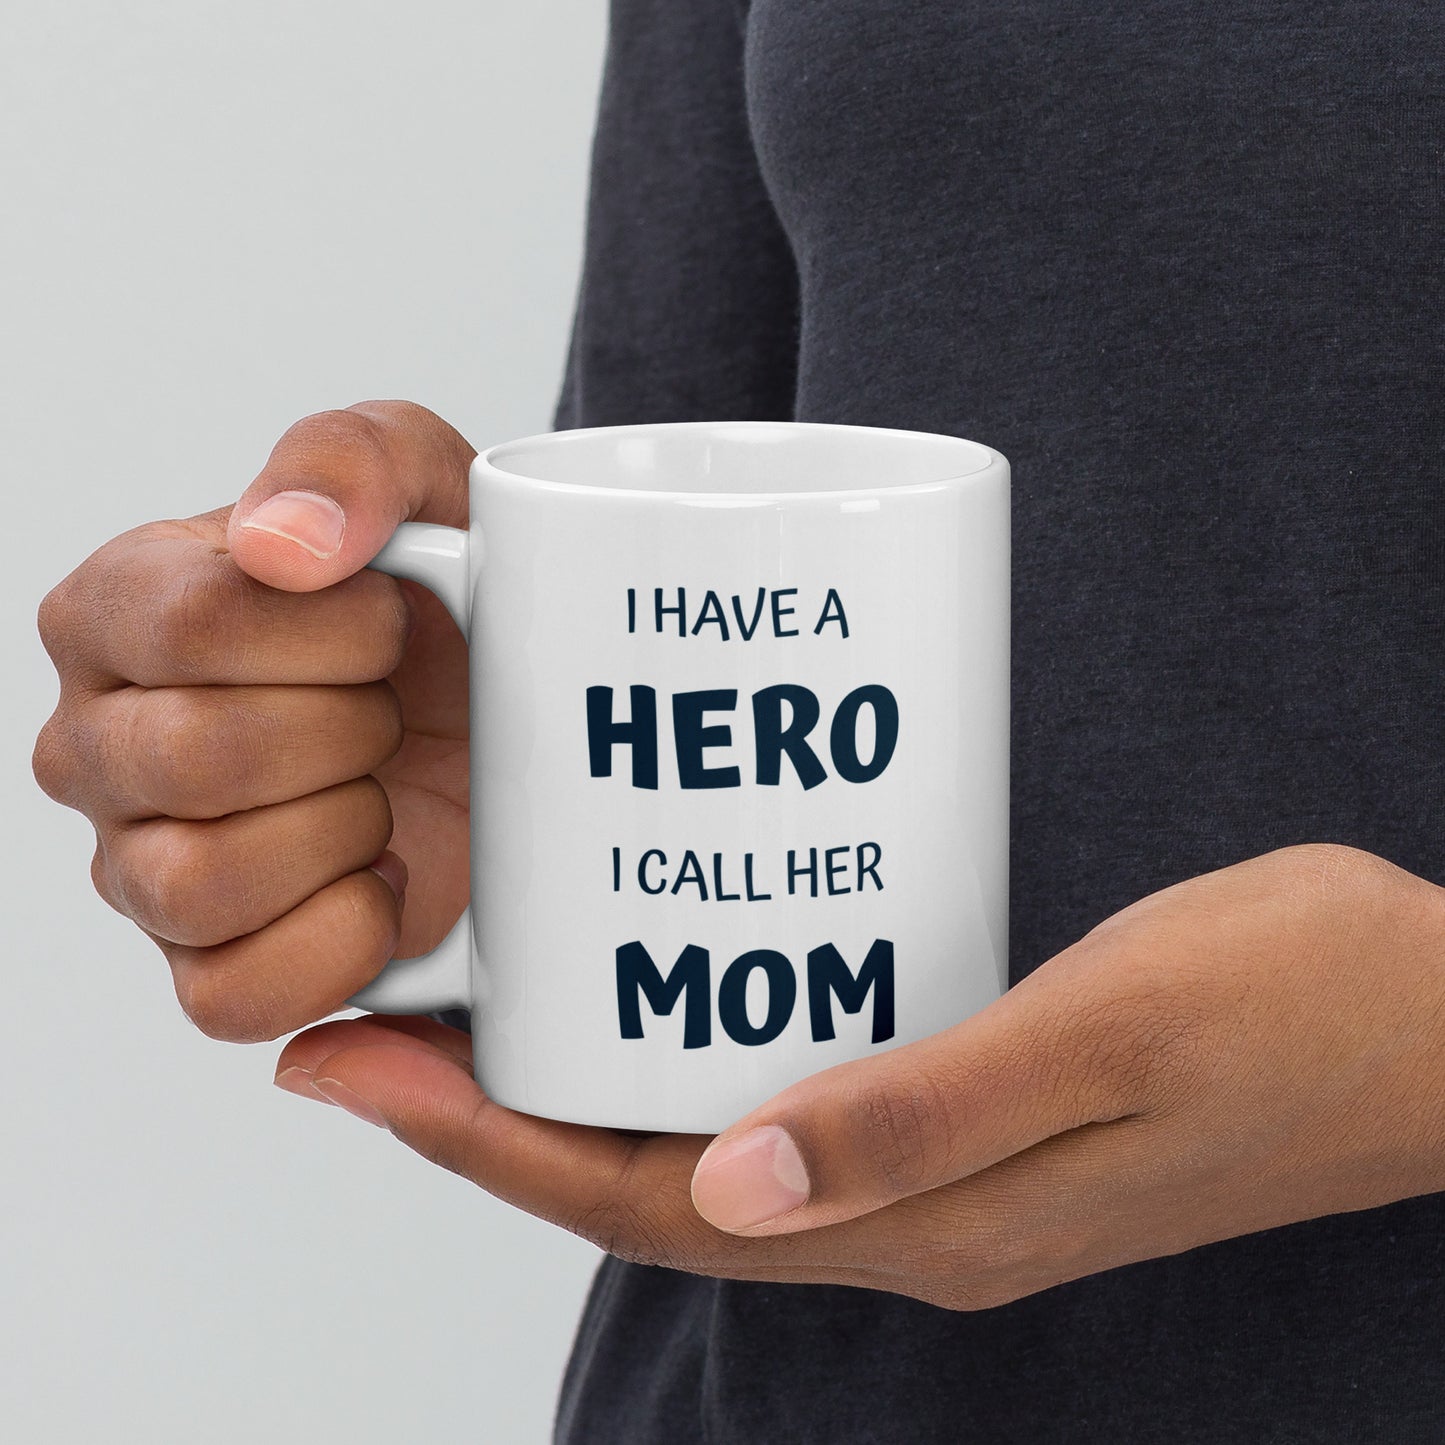 I Have A Hero I Call Her MOM White Glossy Mug